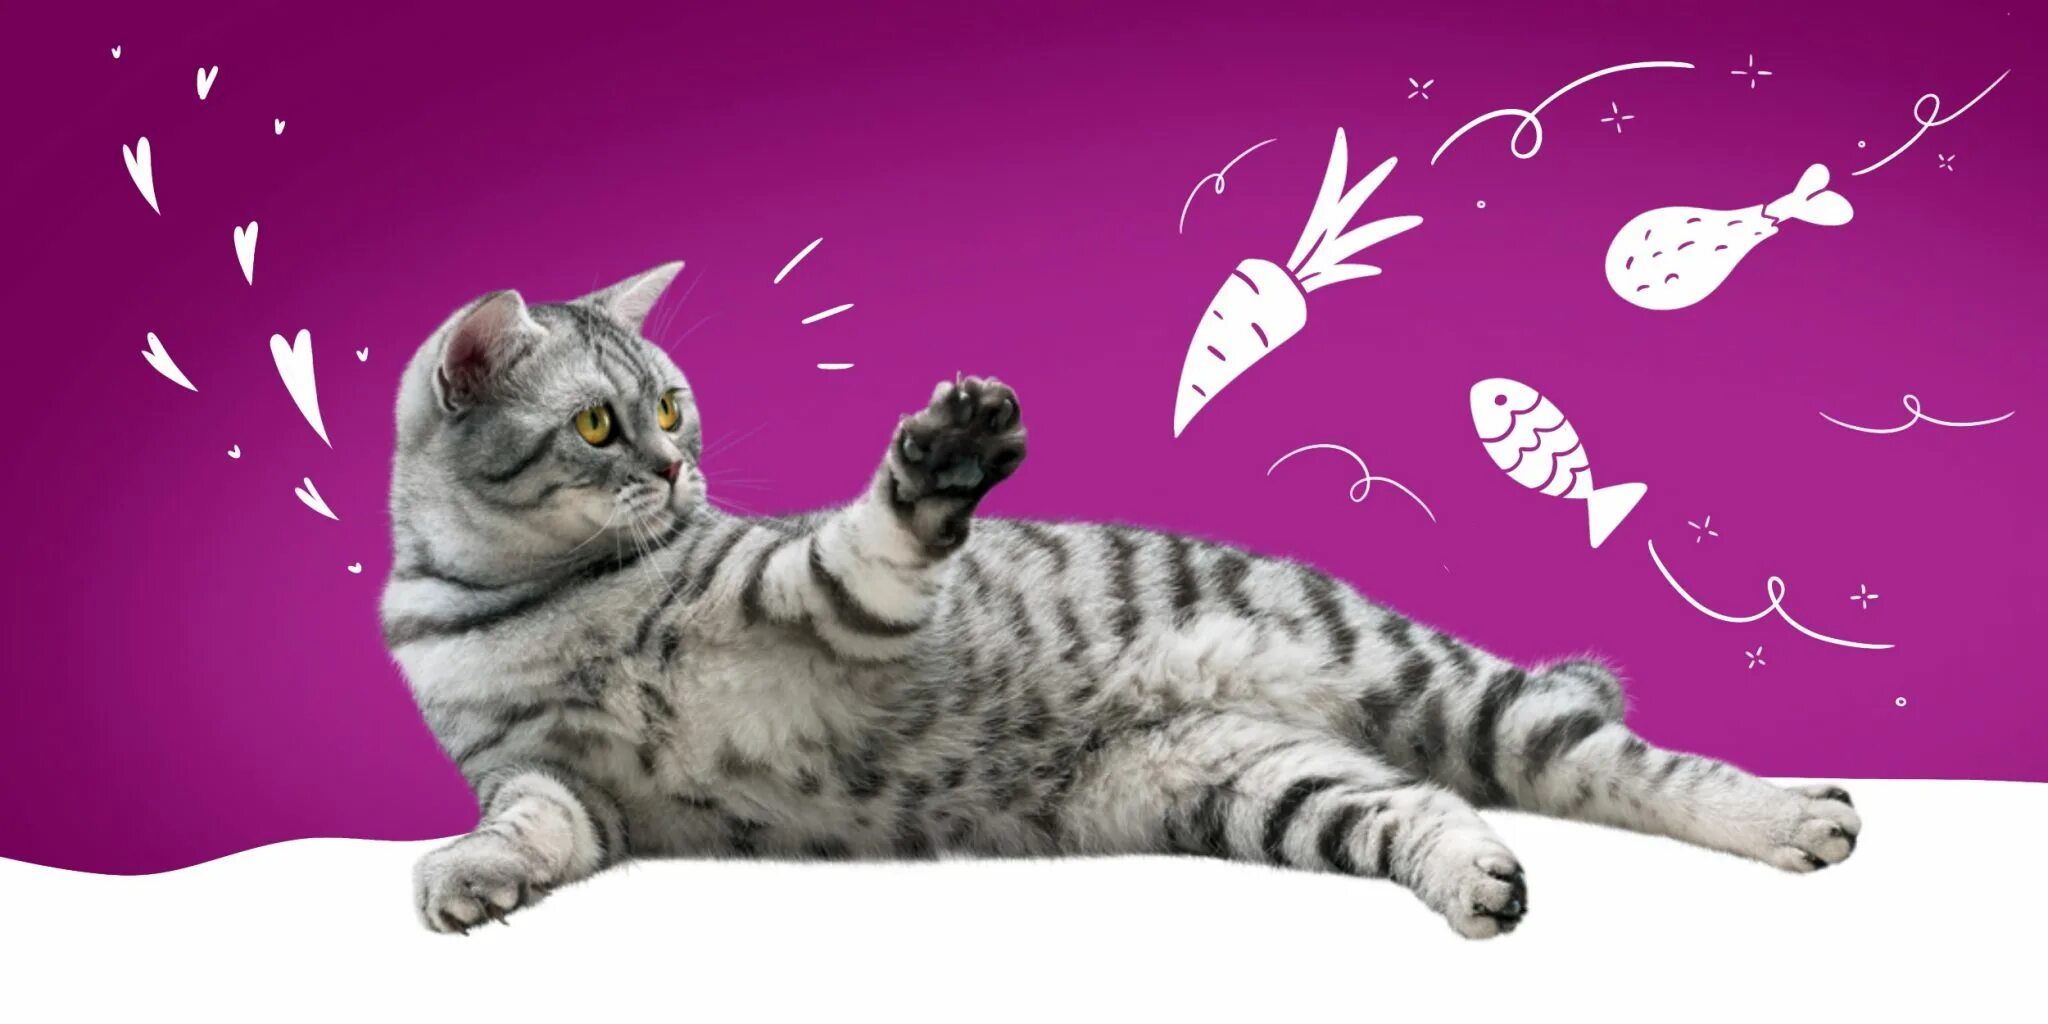 Кошка вискас. Реклама вискас. Кошка из рекламы вискас. Картина вискаса. Музыка из рекламы вискас